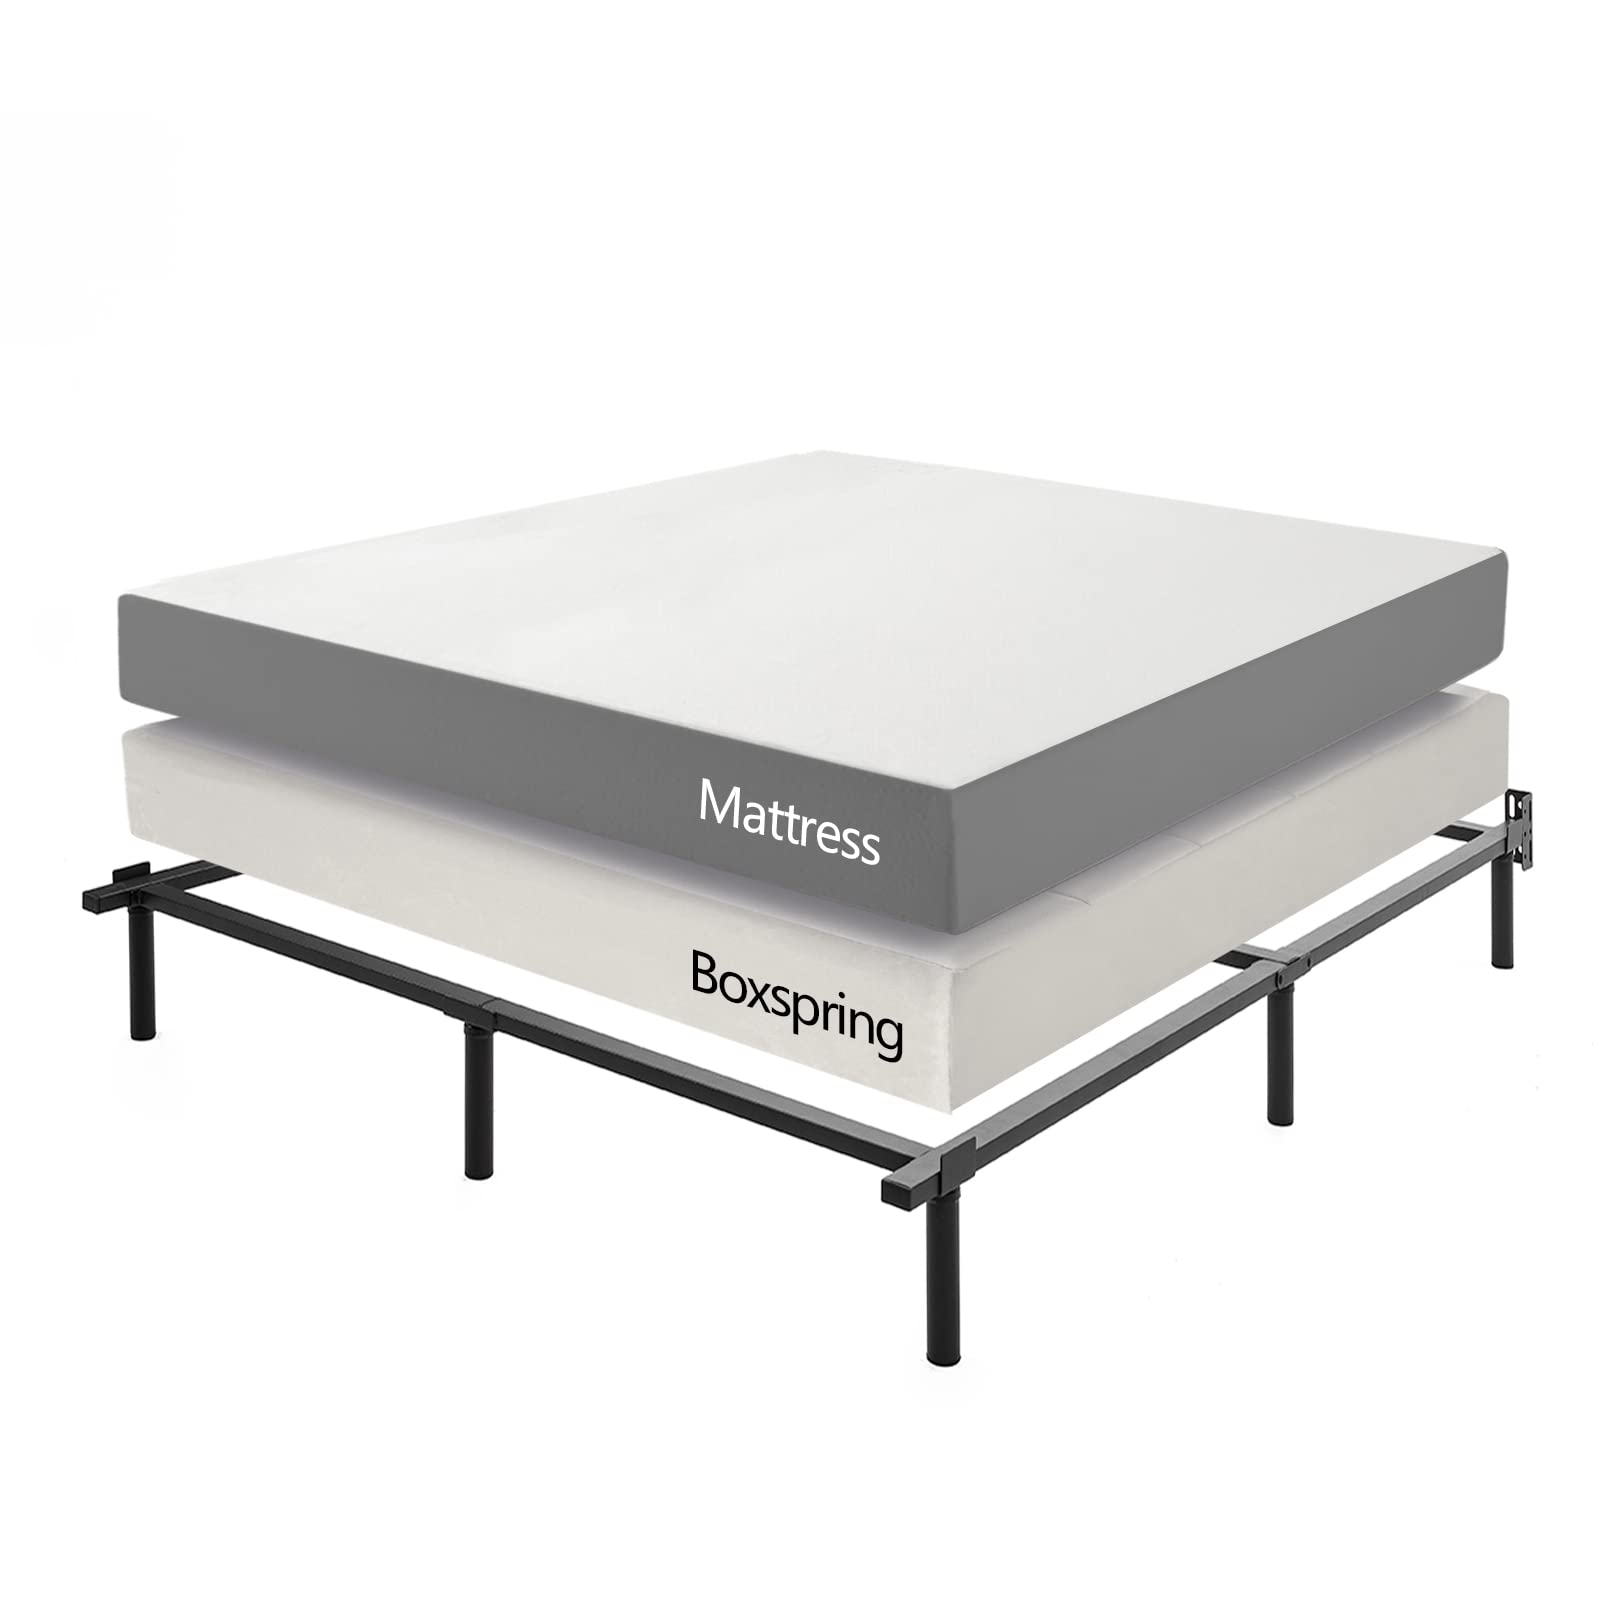 Mofesun Metal Bed Frame King - Black Metal Platform Bed 9-Leg Base, Tool Free Easy Assembly for Box Spring and Mattress (King)